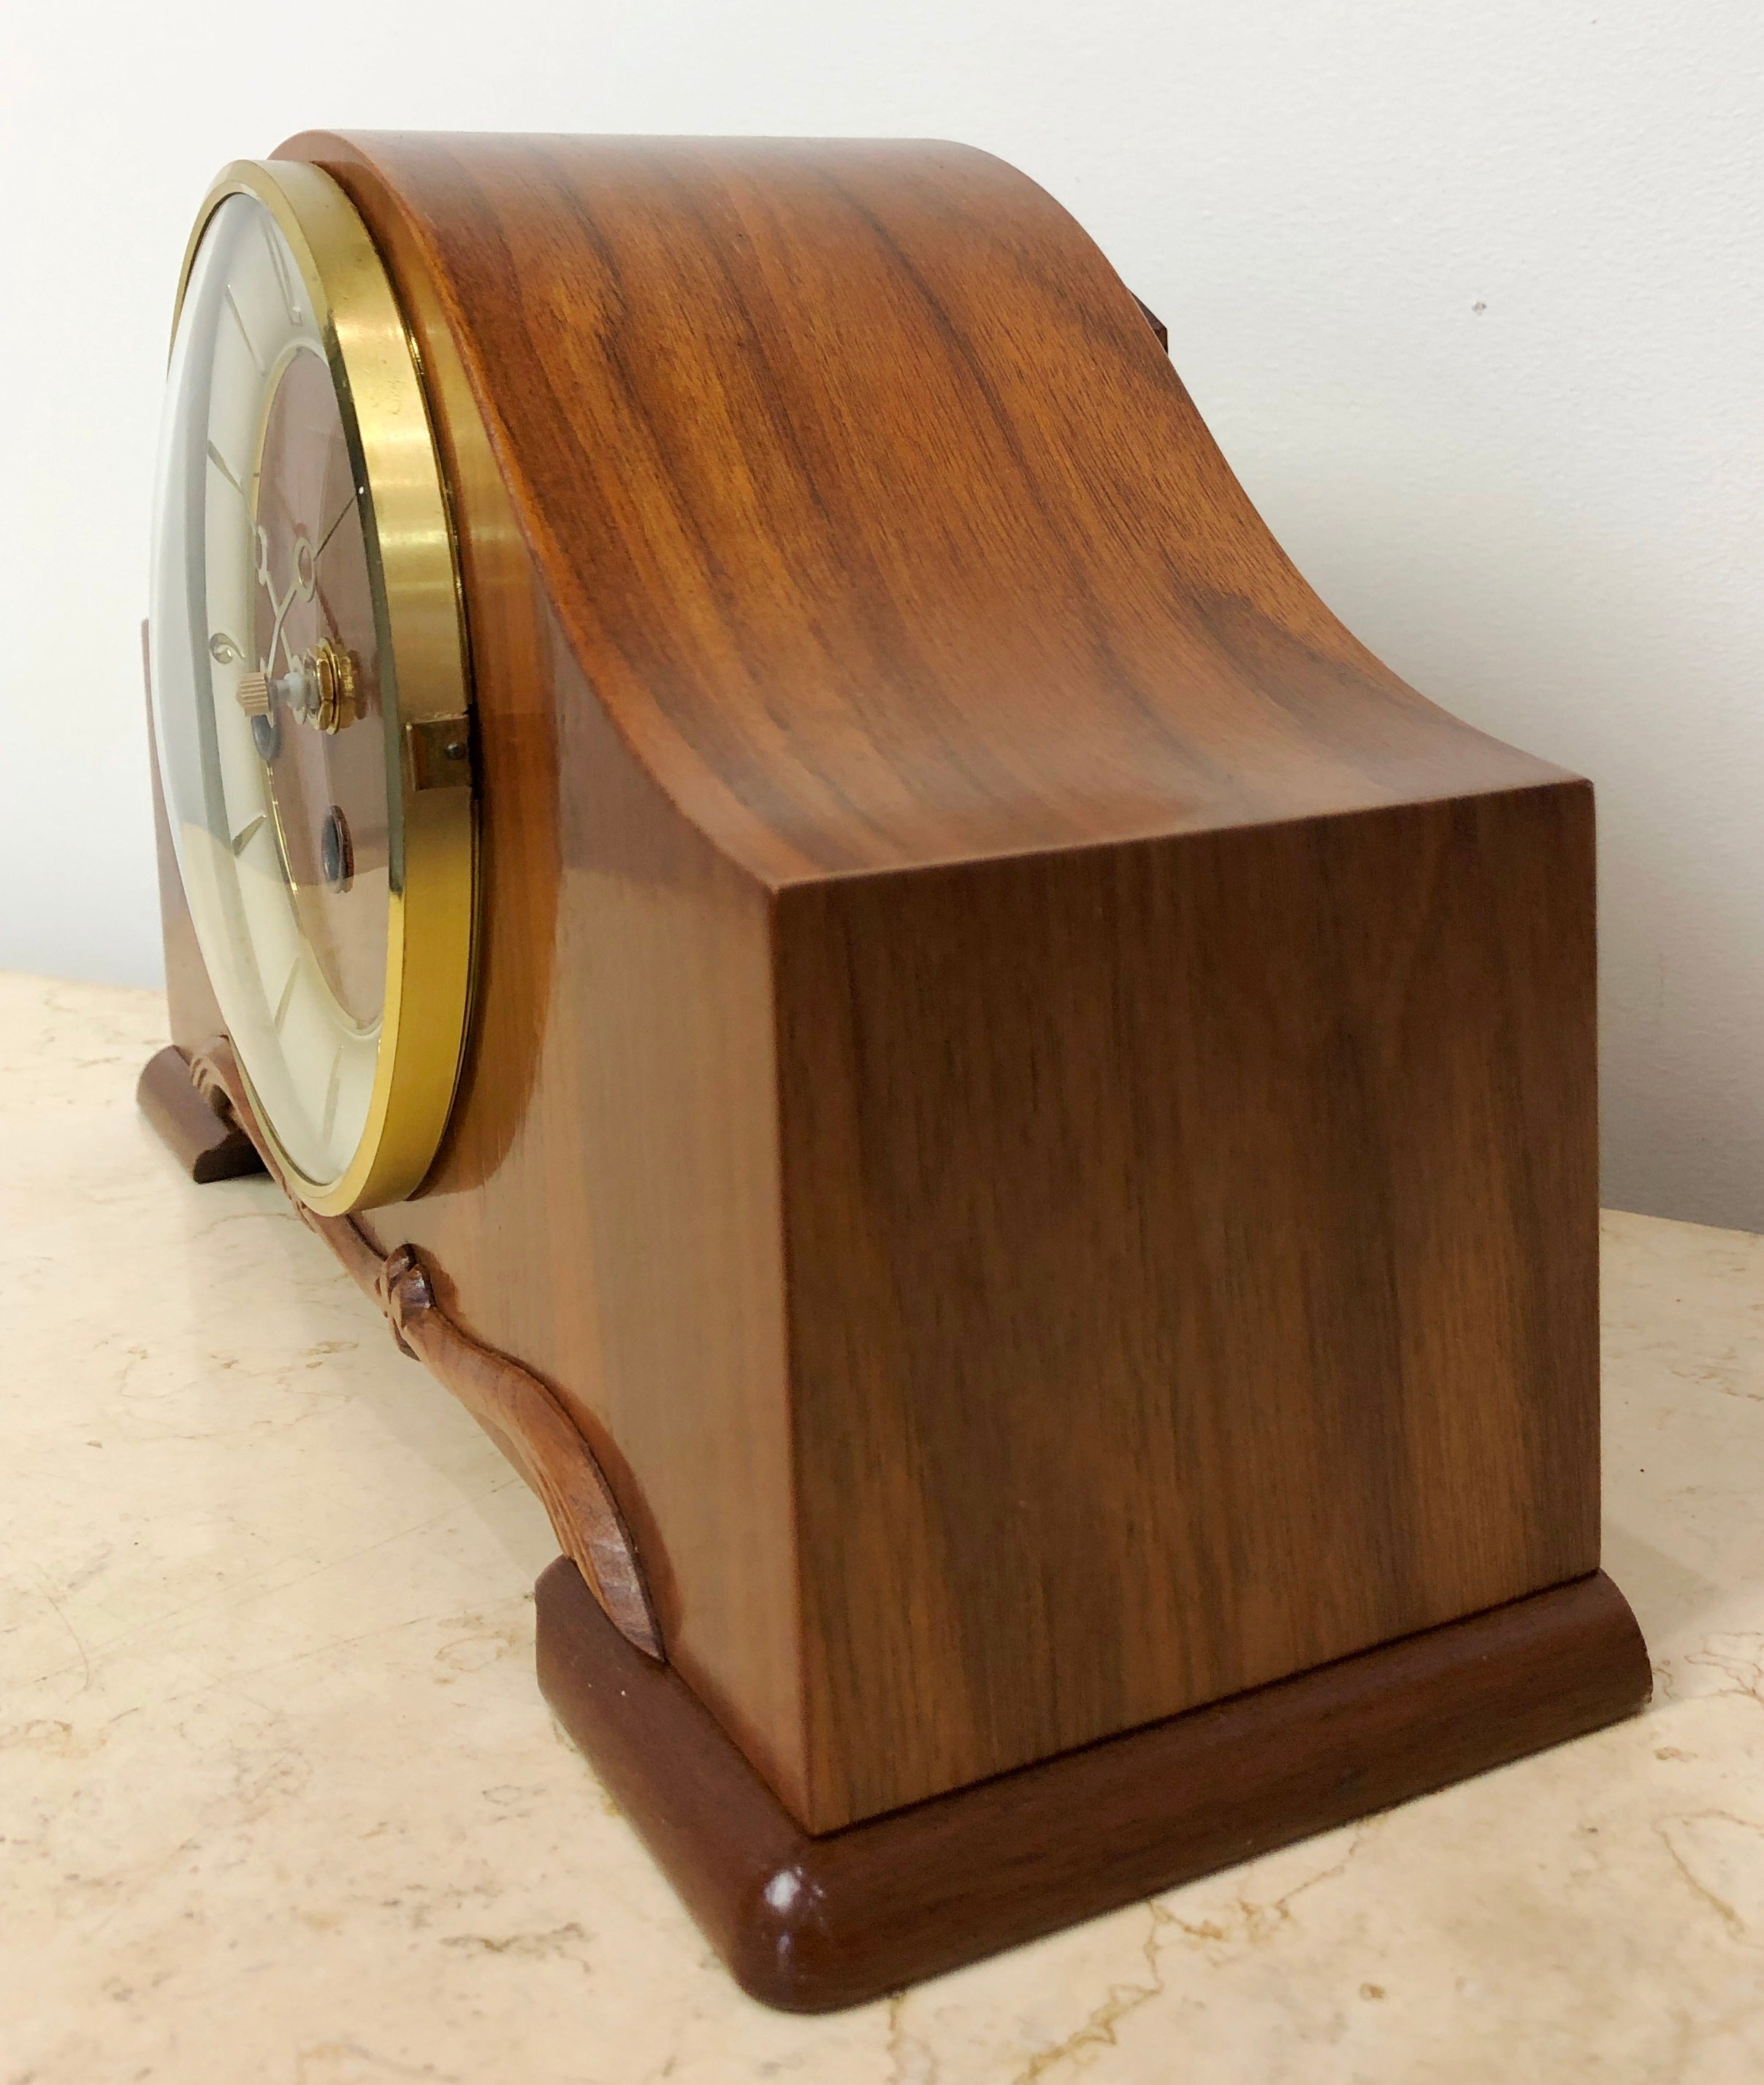 Vintage Franz Hermle Westminster Battery Mantel Clock | eXibit collection